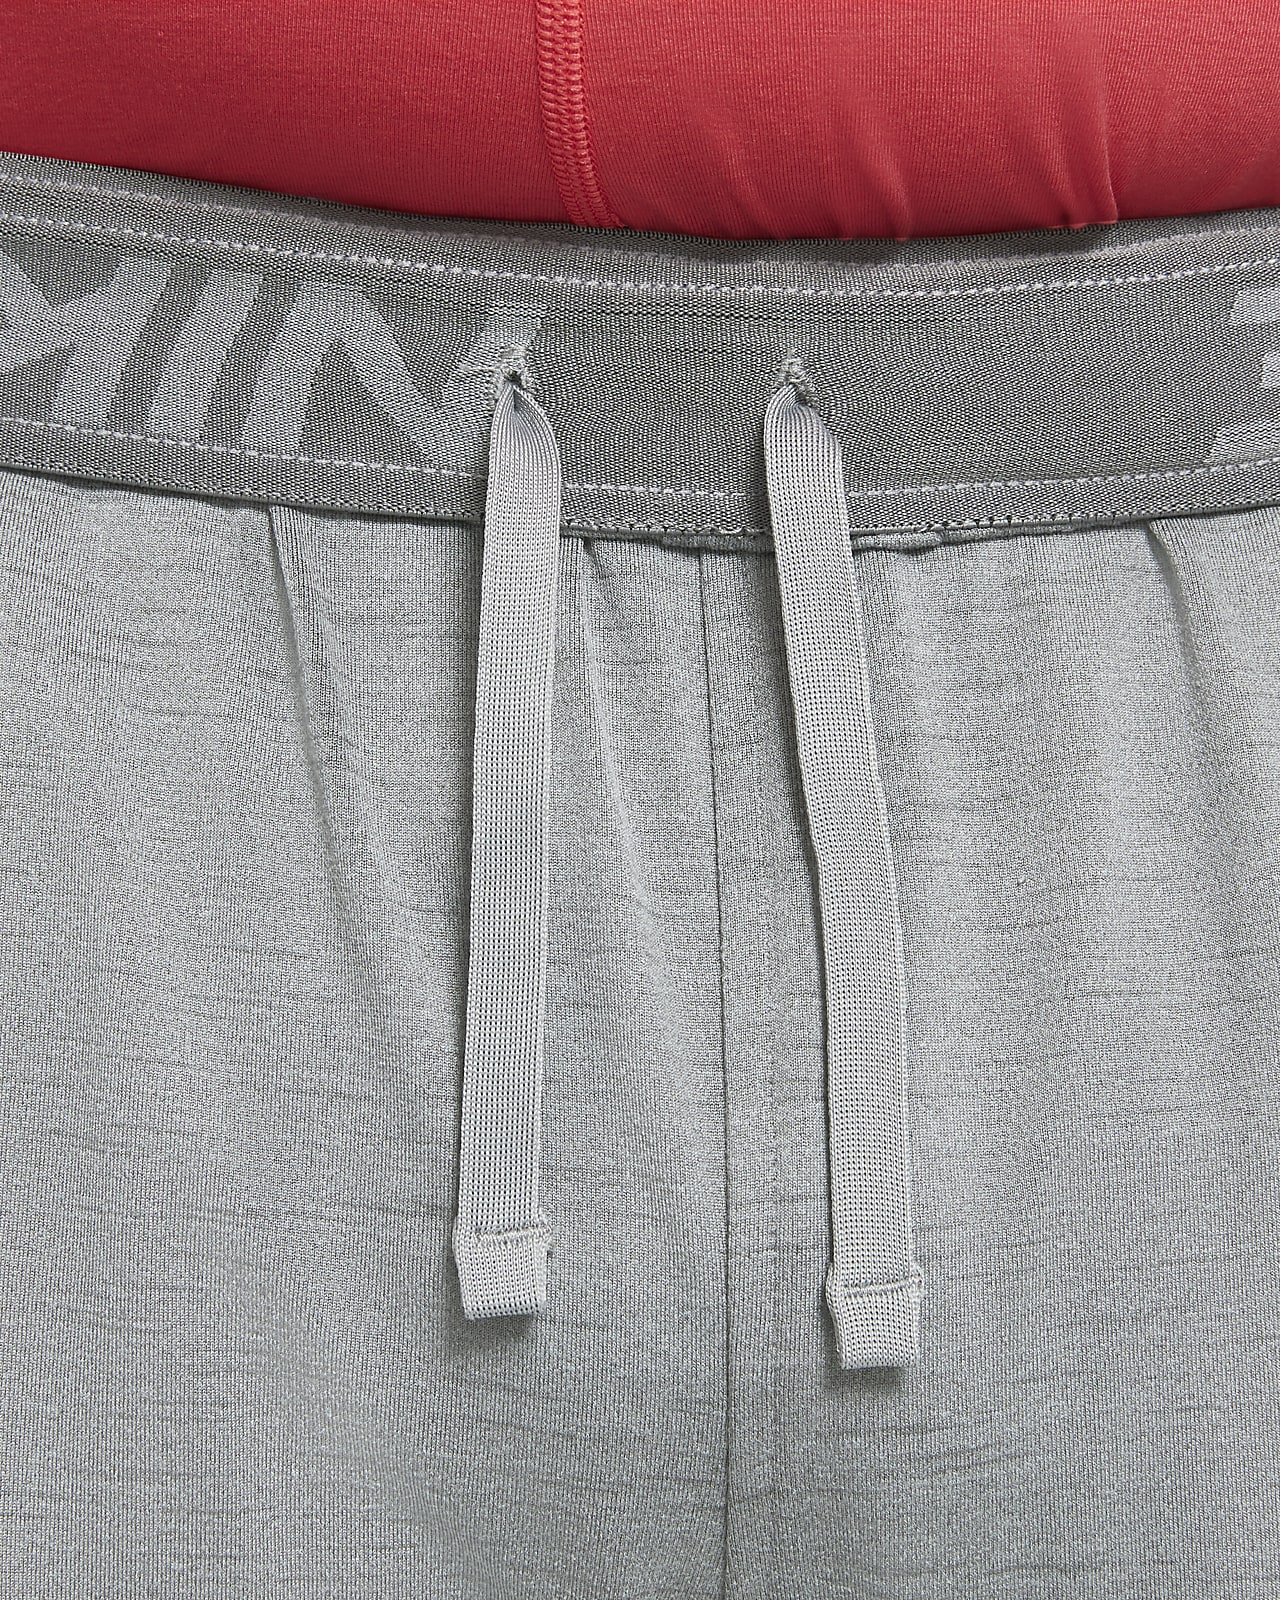 Nike Yoga Dri-FIT Pants W DM7037-010 – Your Sports Performance